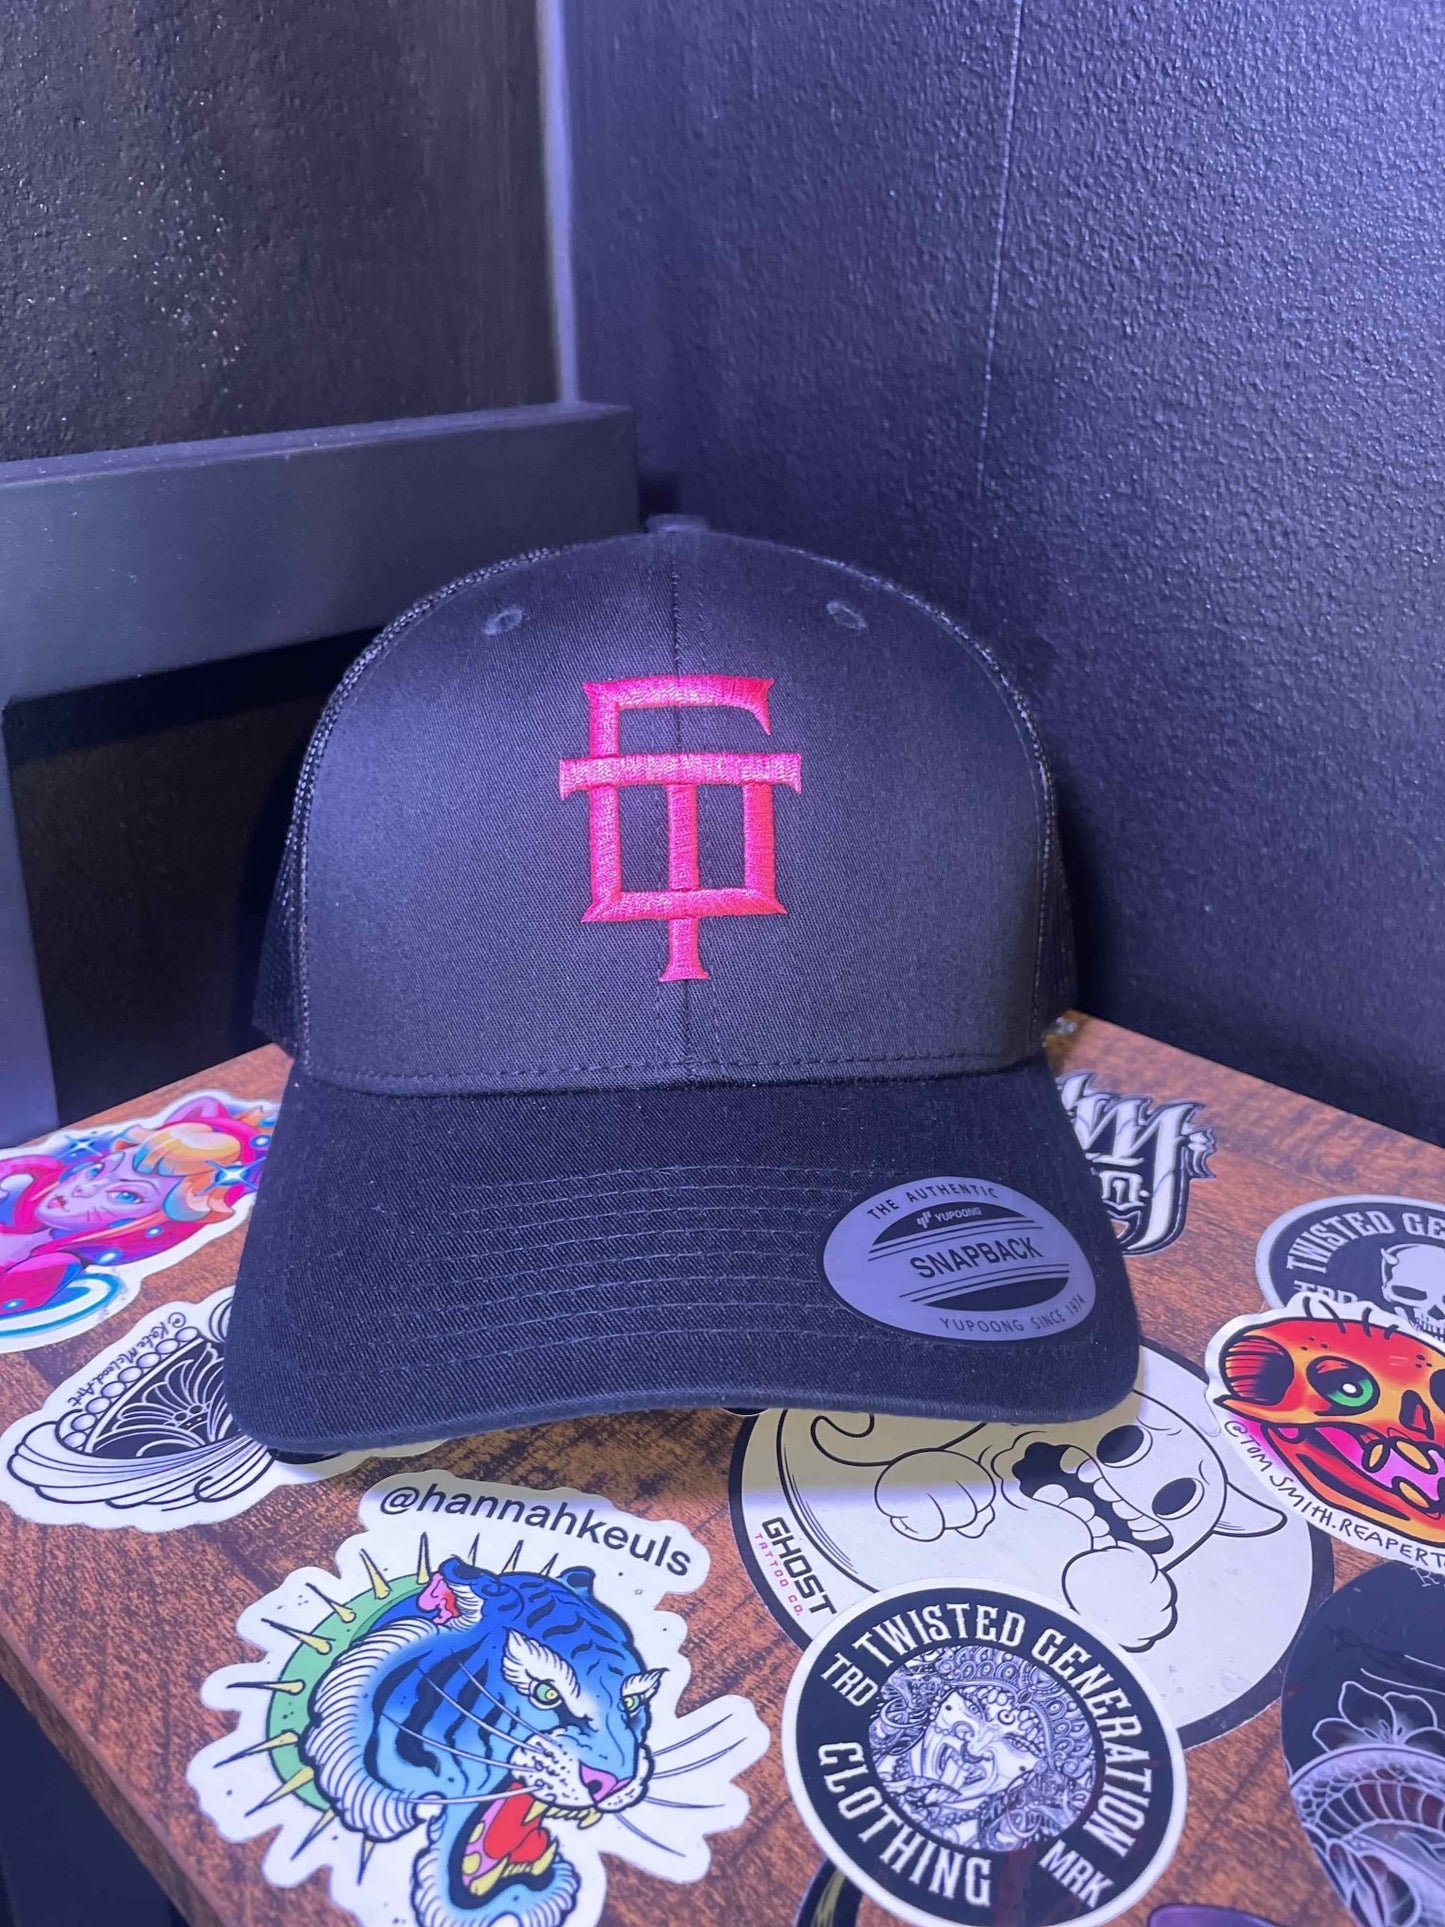 TG Retro Trucker Snapback - Pink on Black